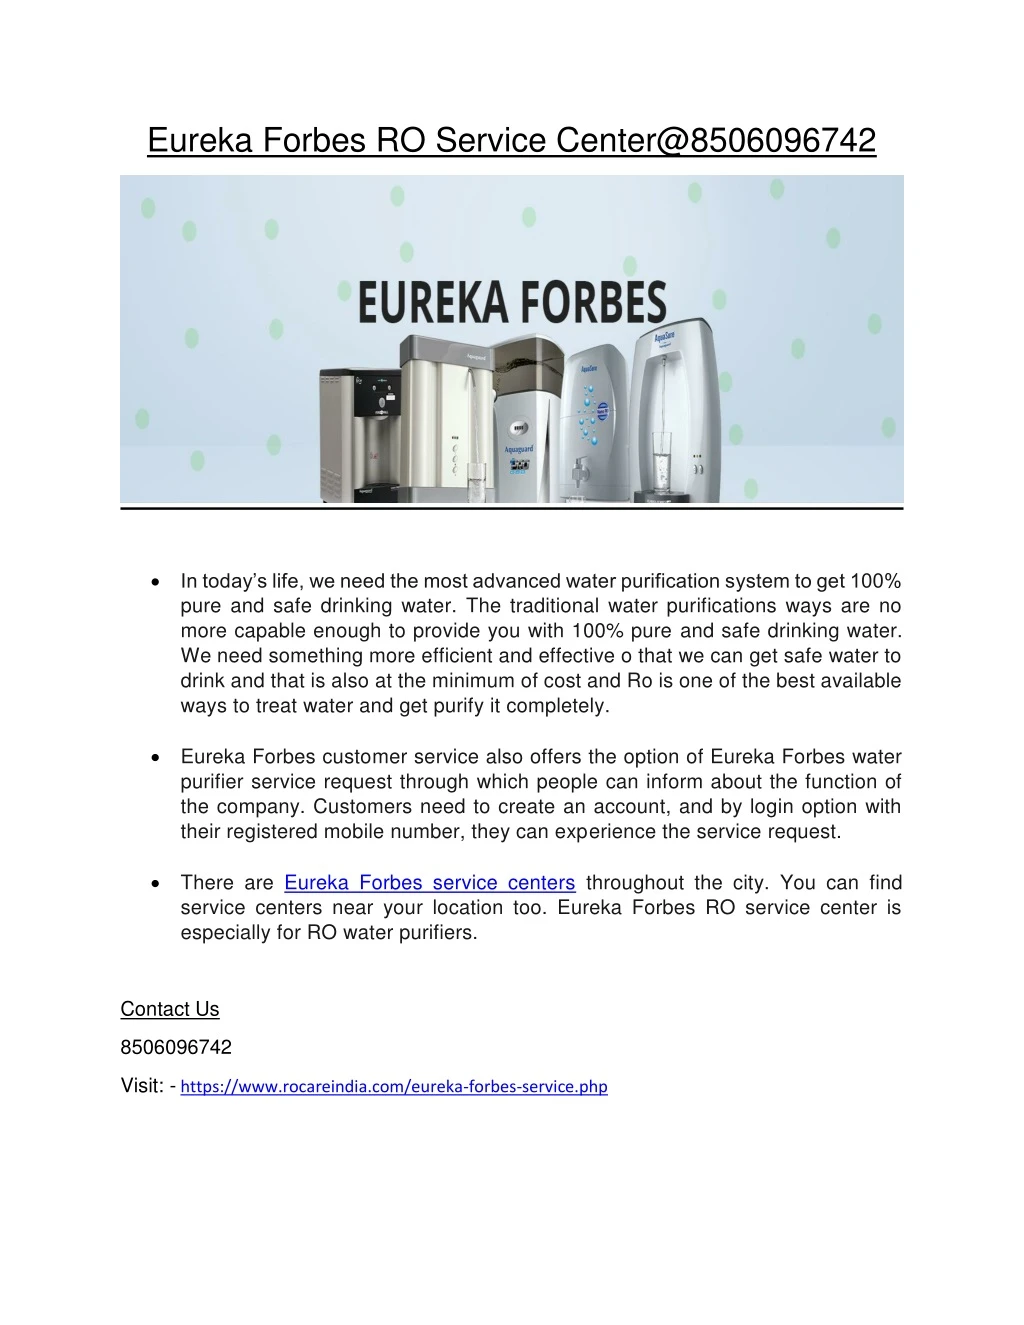 eureka forbes ro service center@8506096742